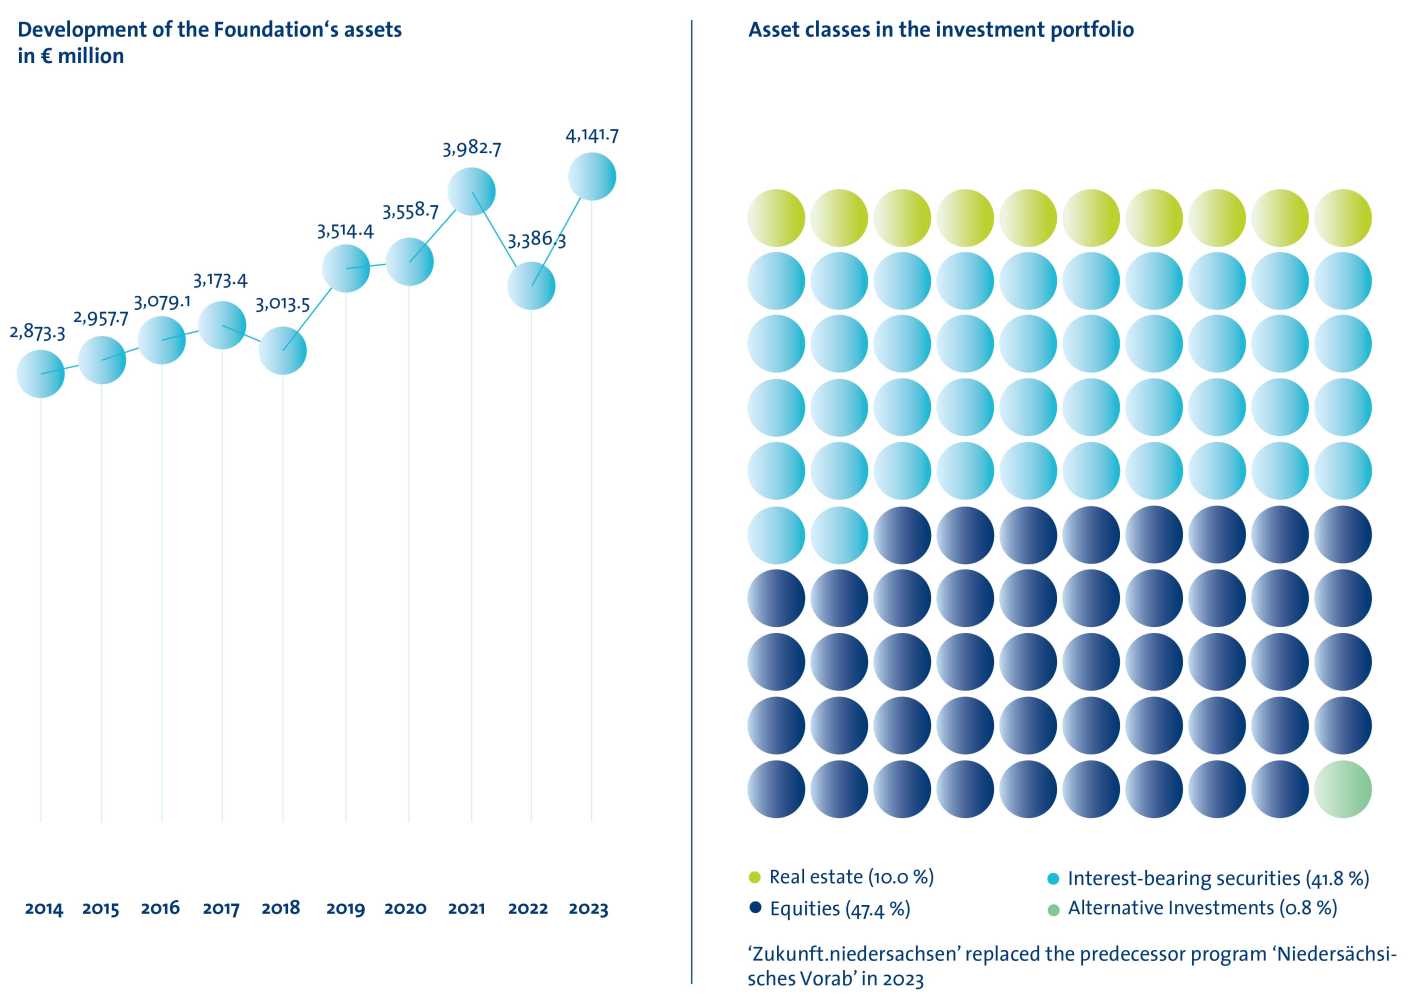 annual report diagrams: development of assets, asset classes in portfolio